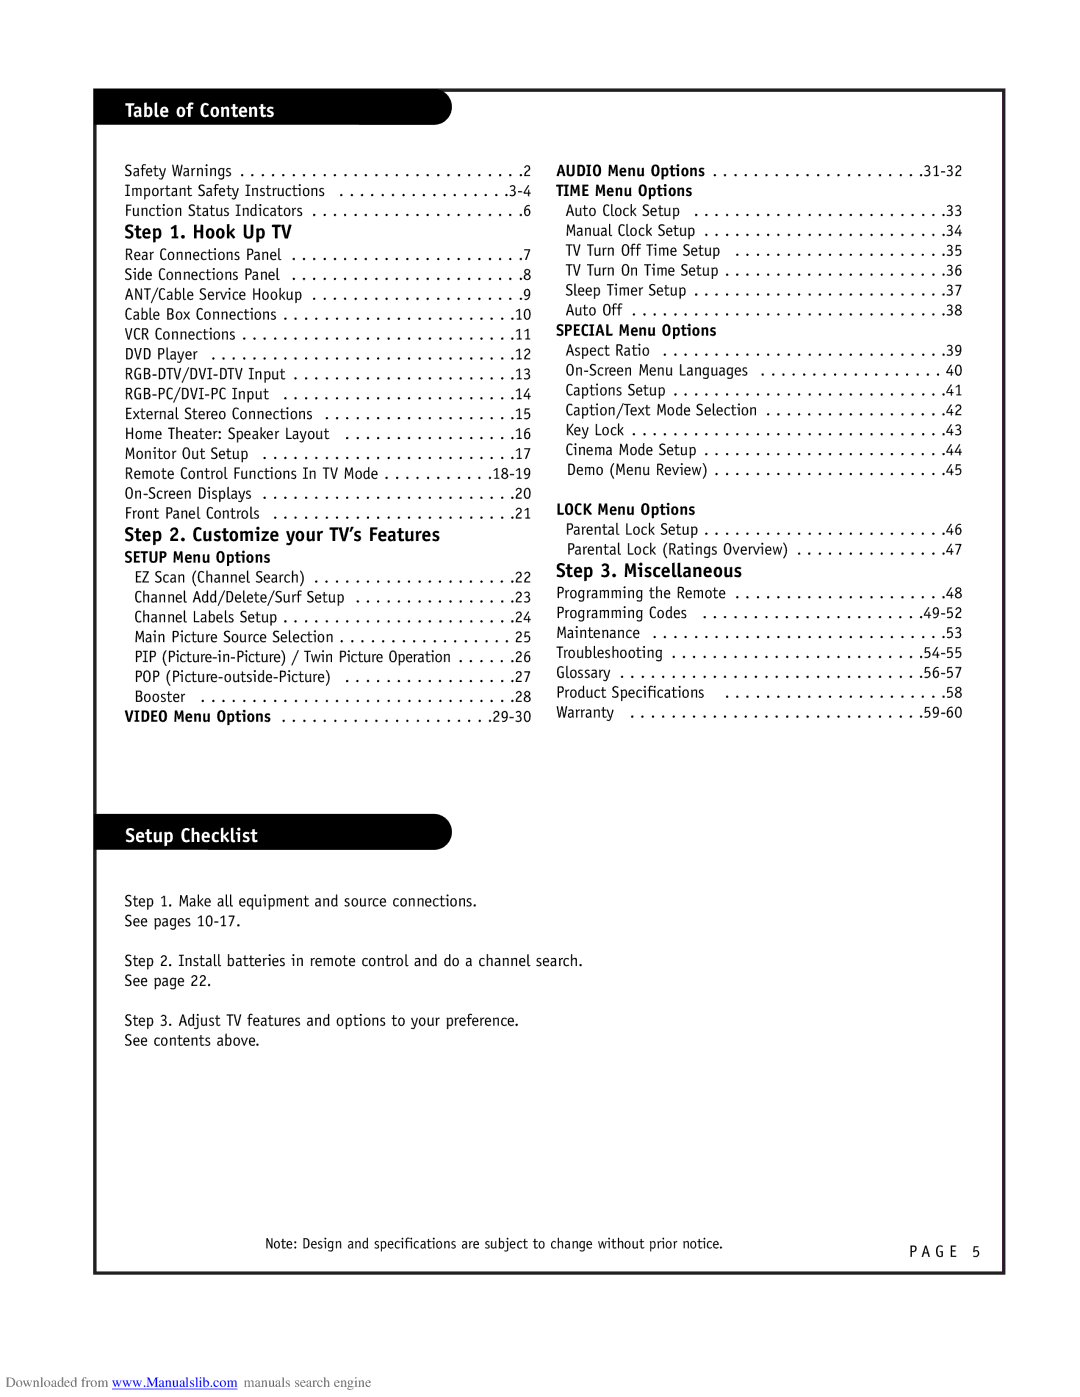 LG Electronics ru-44sz80l owner manual Table of Contents, Setup Checklist 